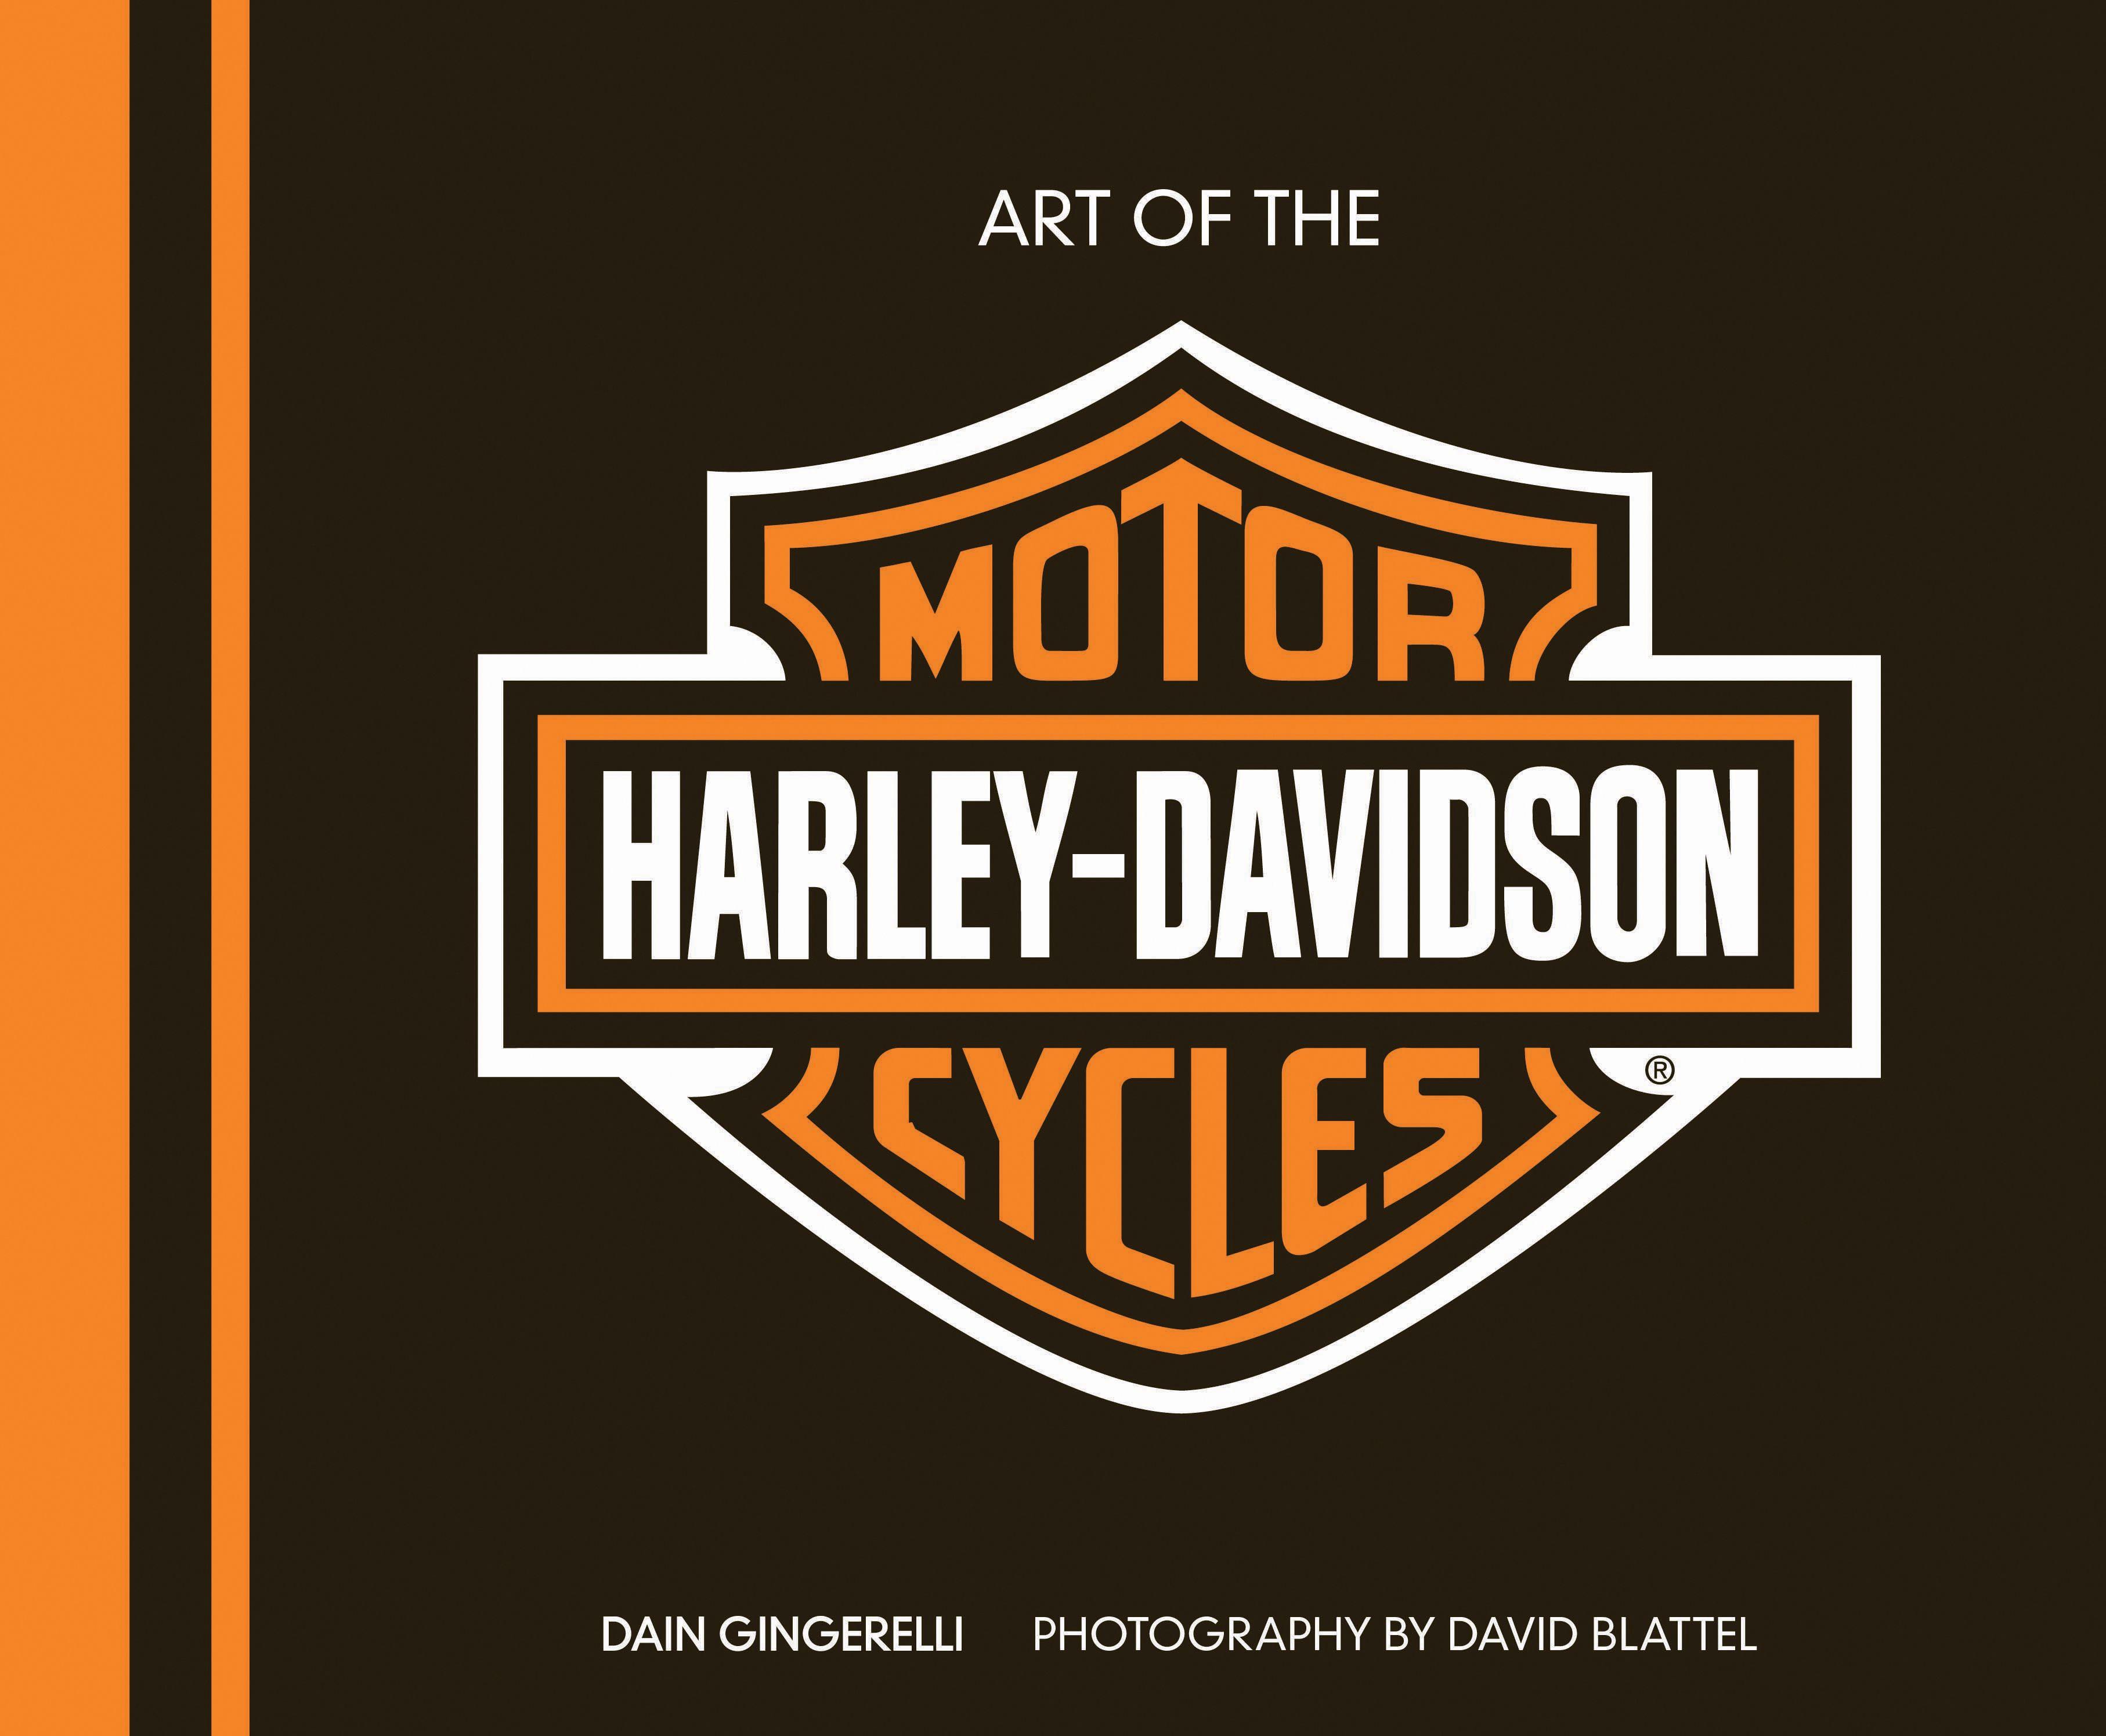 Harley Davidson Football Logo - Art Of The Harley Davidson Motorcycle Edition